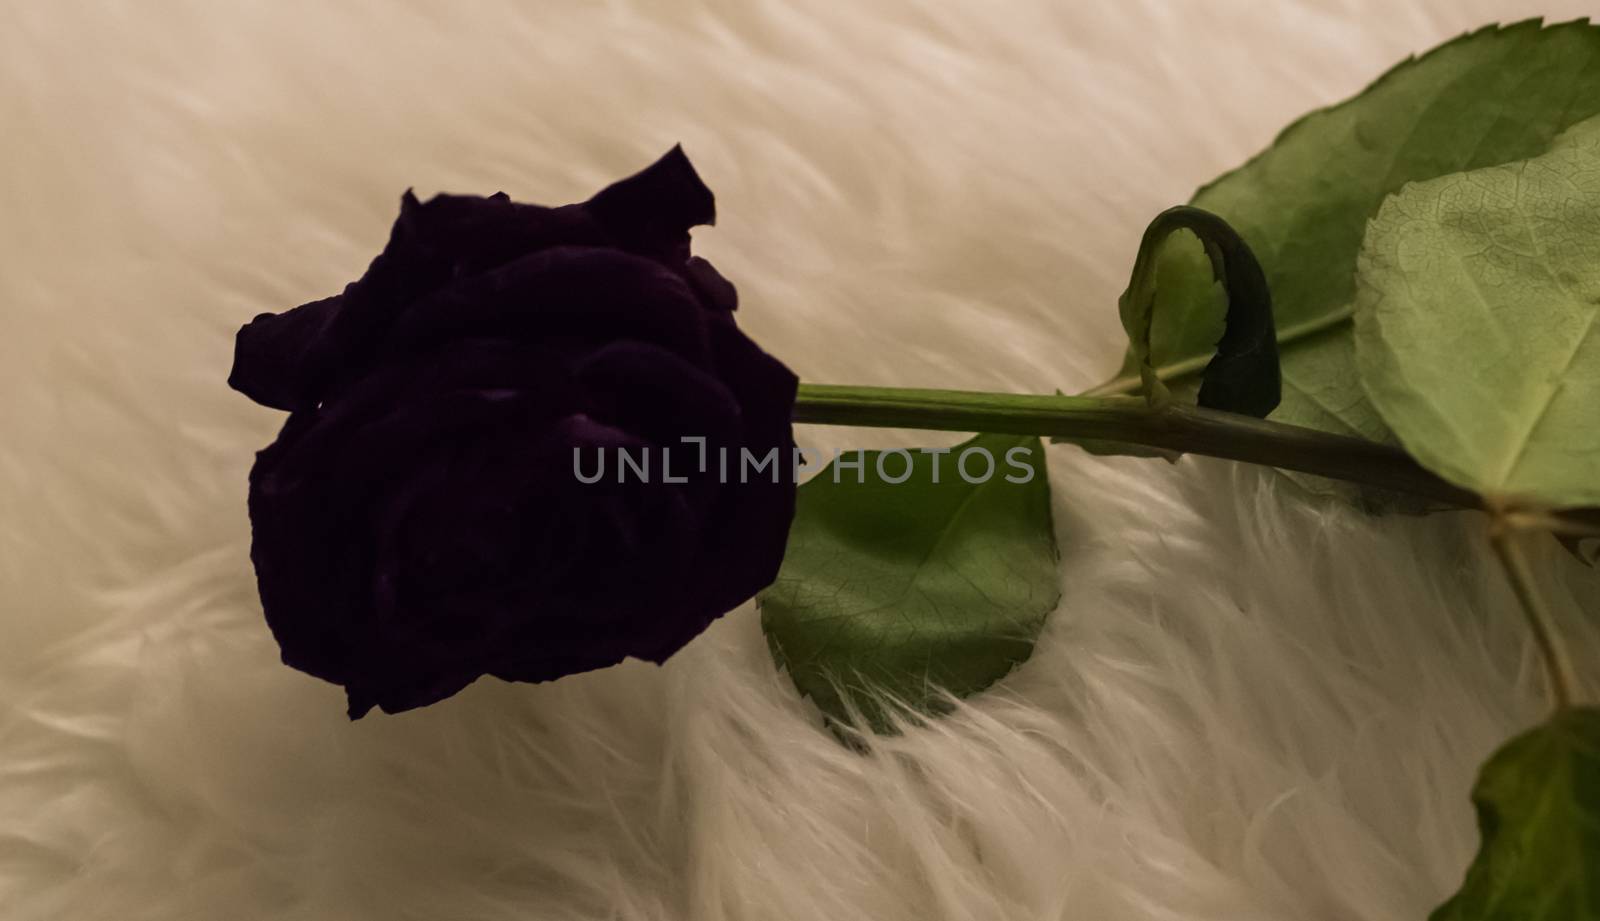 Gothic valentines day gift a dark black rose a strange way to express love by charlottebleijenberg